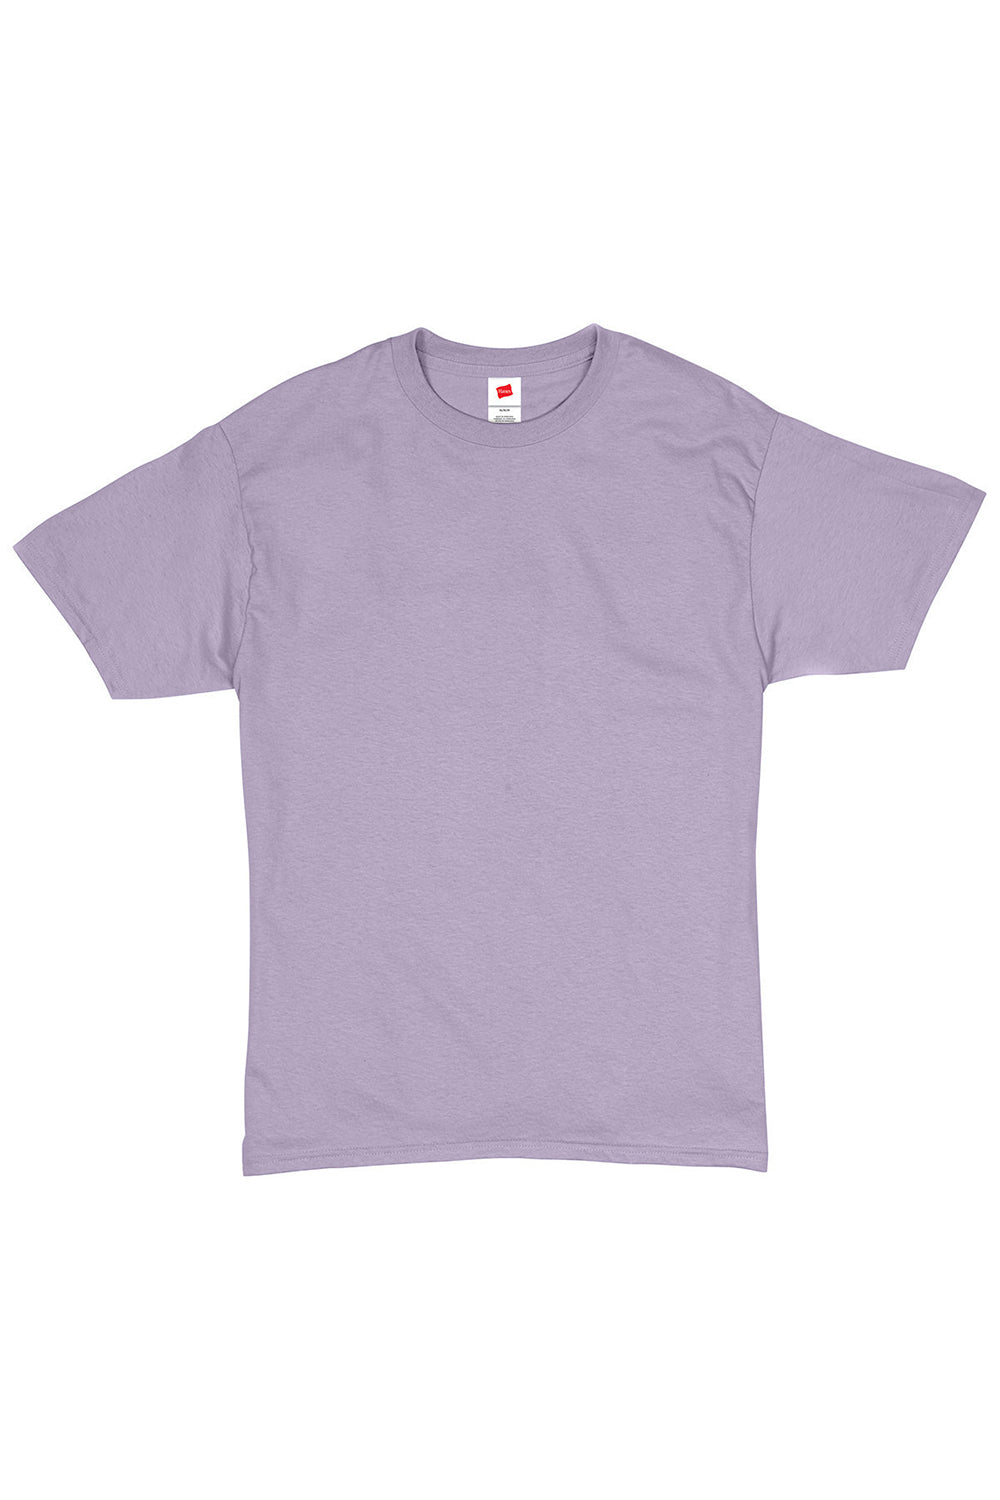 Hanes 5280 Mens ComfortSoft Short Sleeve Crewneck T-Shirt Lavender Purple Flat Front